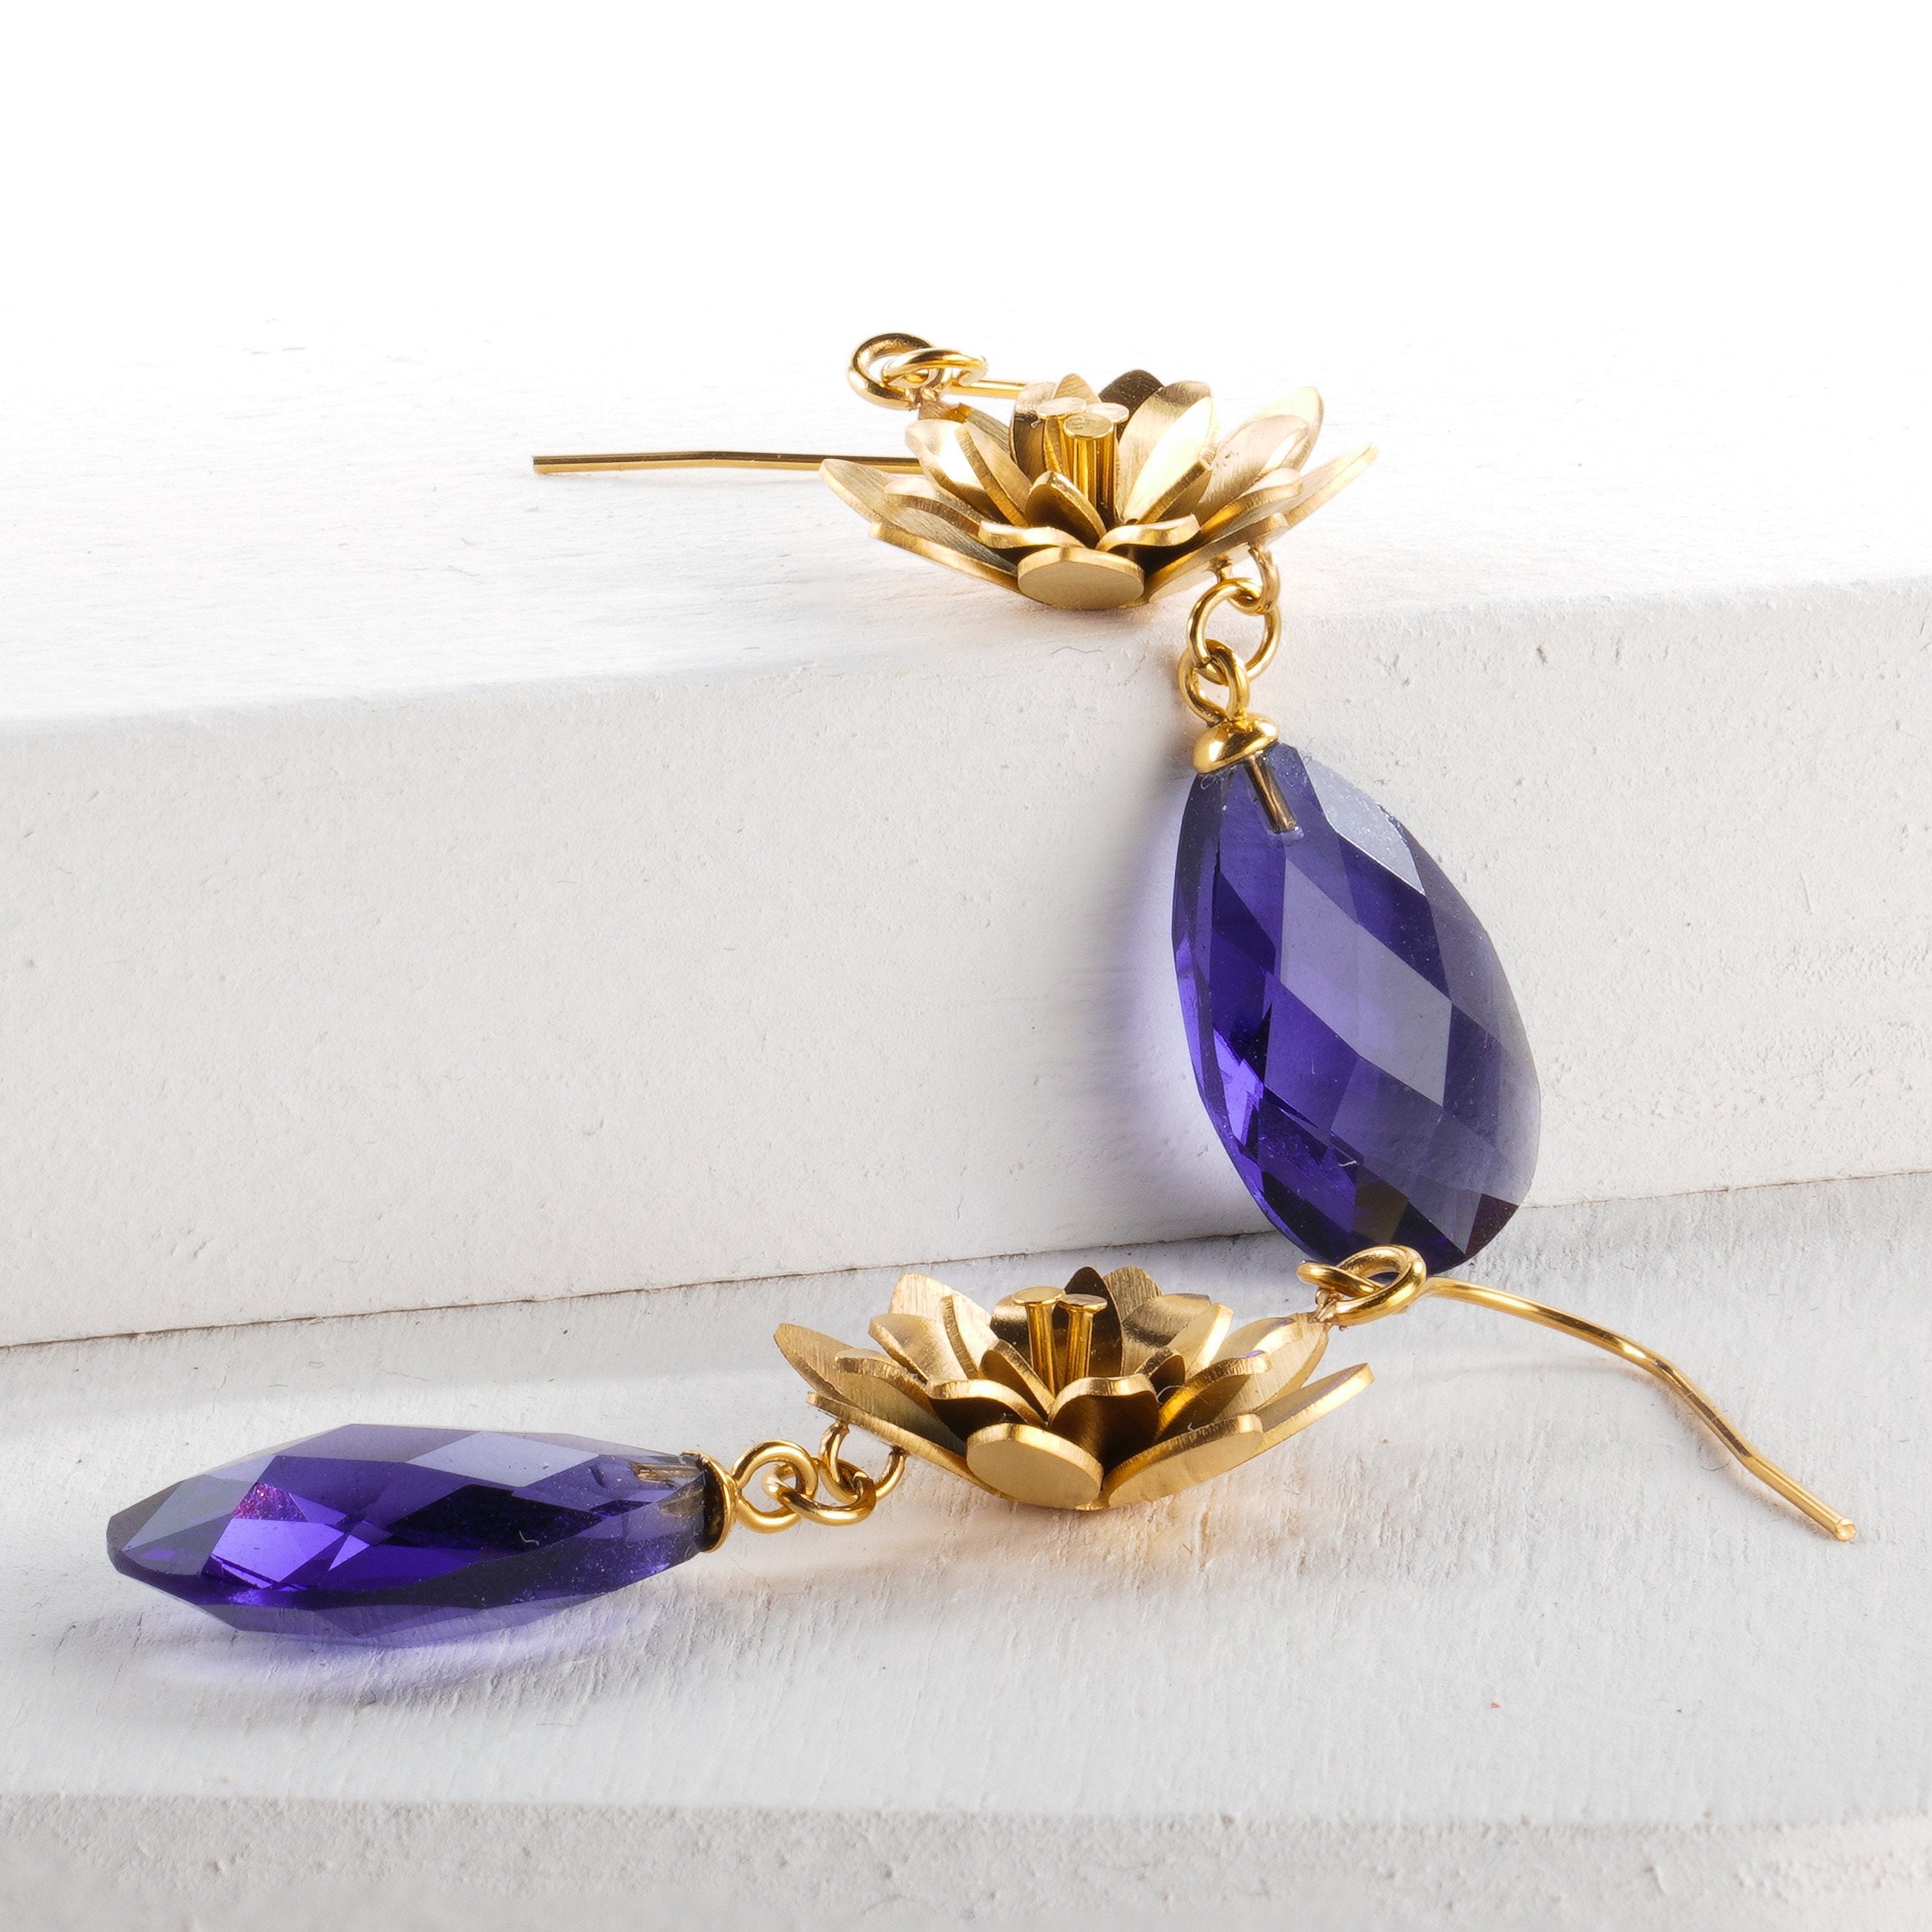 Divinia earrings - Royal purple